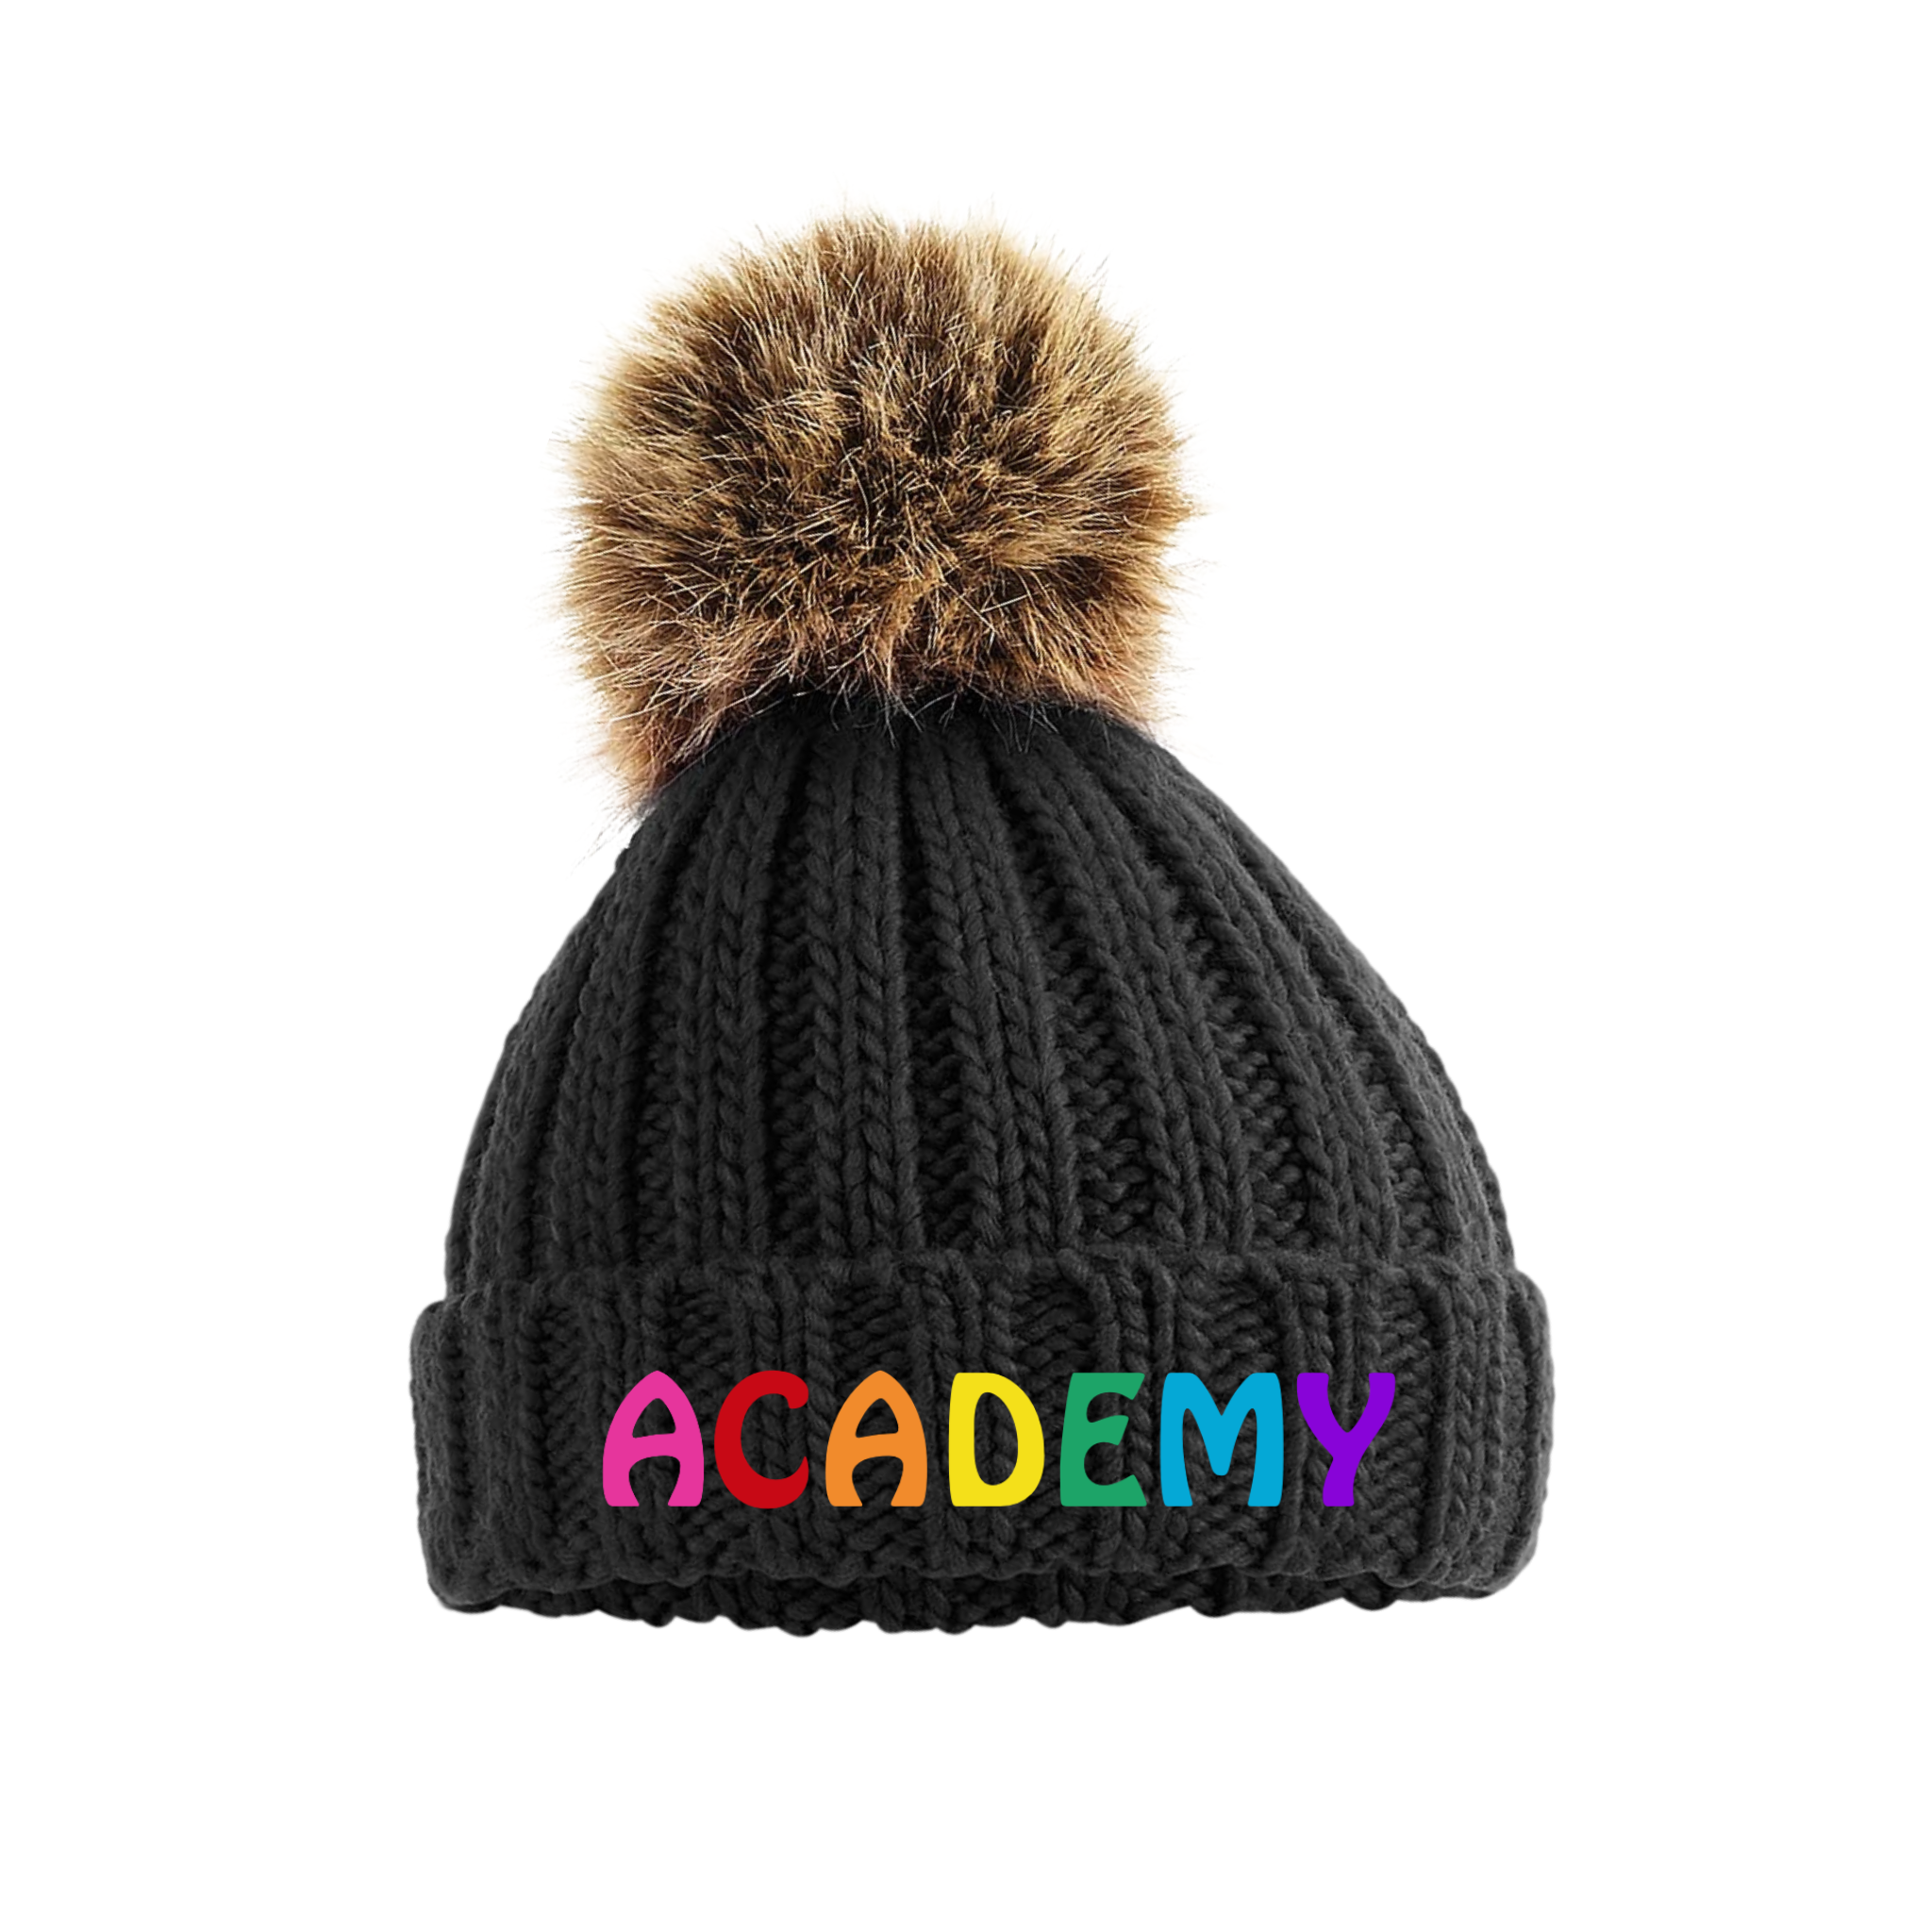 Academy bobble hat